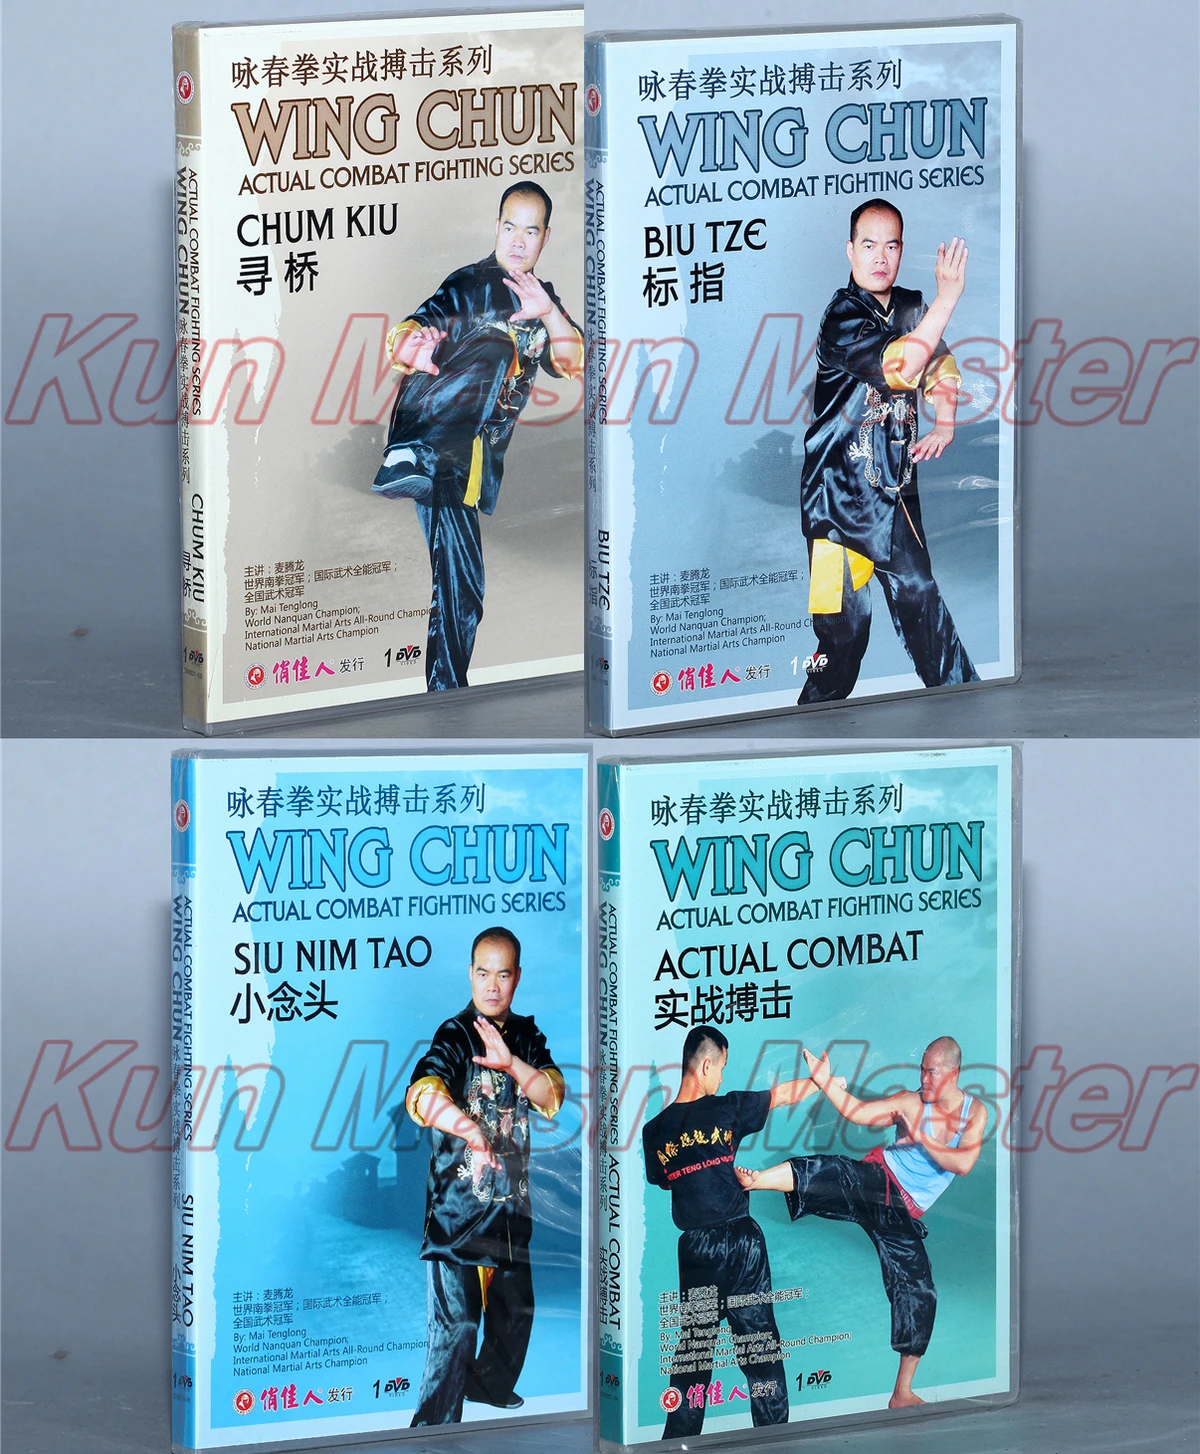 Llorar compilar Privilegiado Wing Chun Conjunto de vídeo de combate de la serie de lucha, disco chino de Kung  Fu, Yong Chun, DVD de enseñanza en inglés, 4 DVD|wing chun|kung fuchinese kung  fu - AliExpress